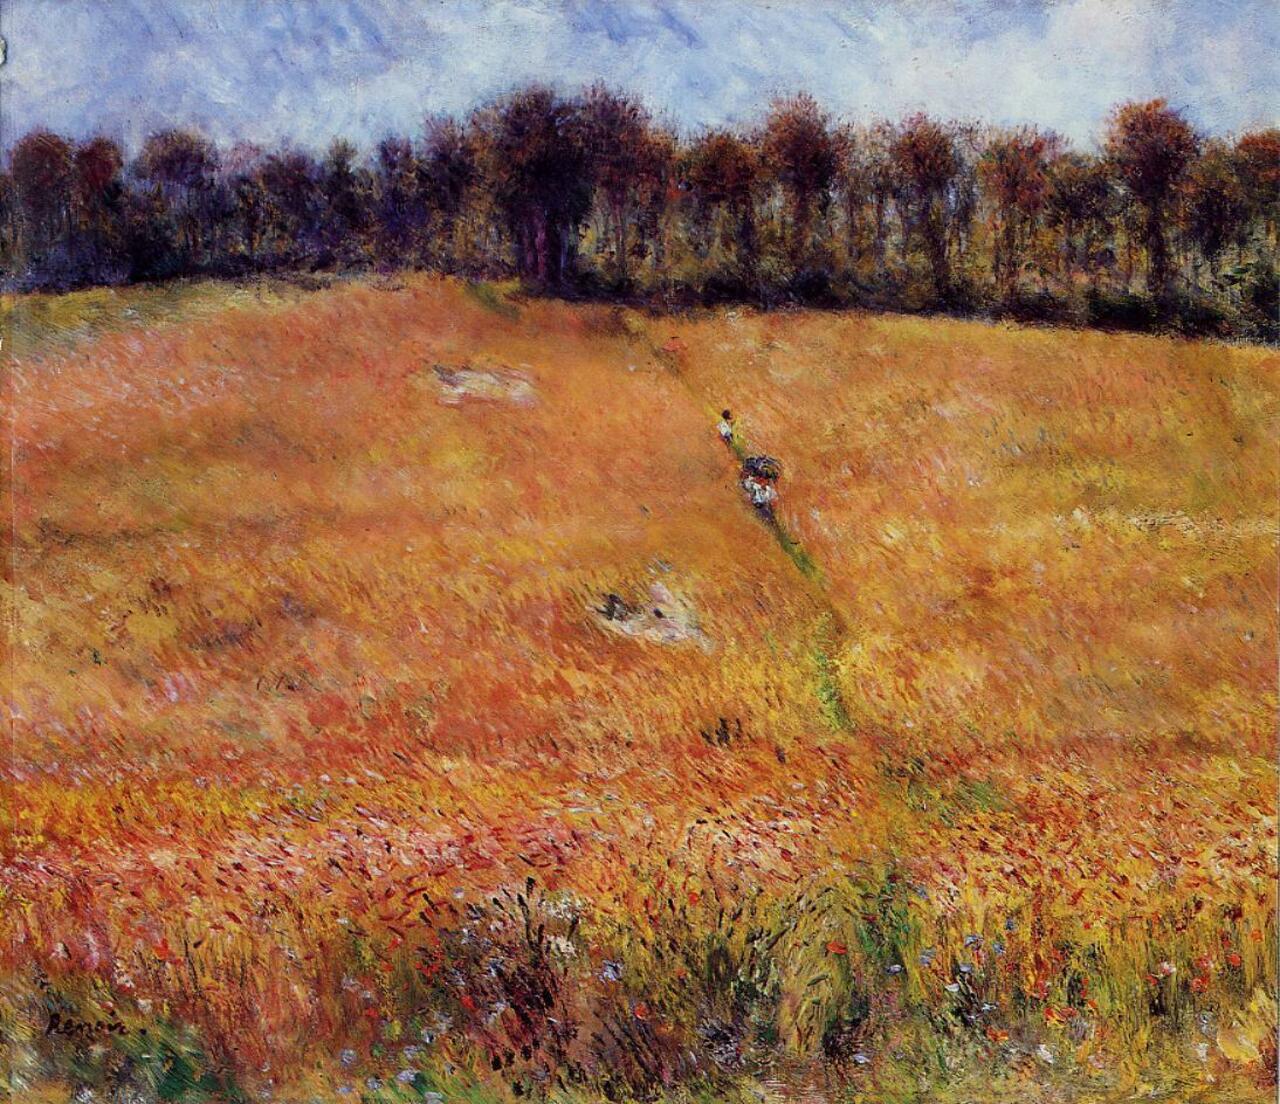 #Impressionism Pierre-Auguste #Renoir , "Sentiero attraverso l'erba alta" 1876 #art  #shareArt #Tweetart http://t.co/F2ZARRhquV